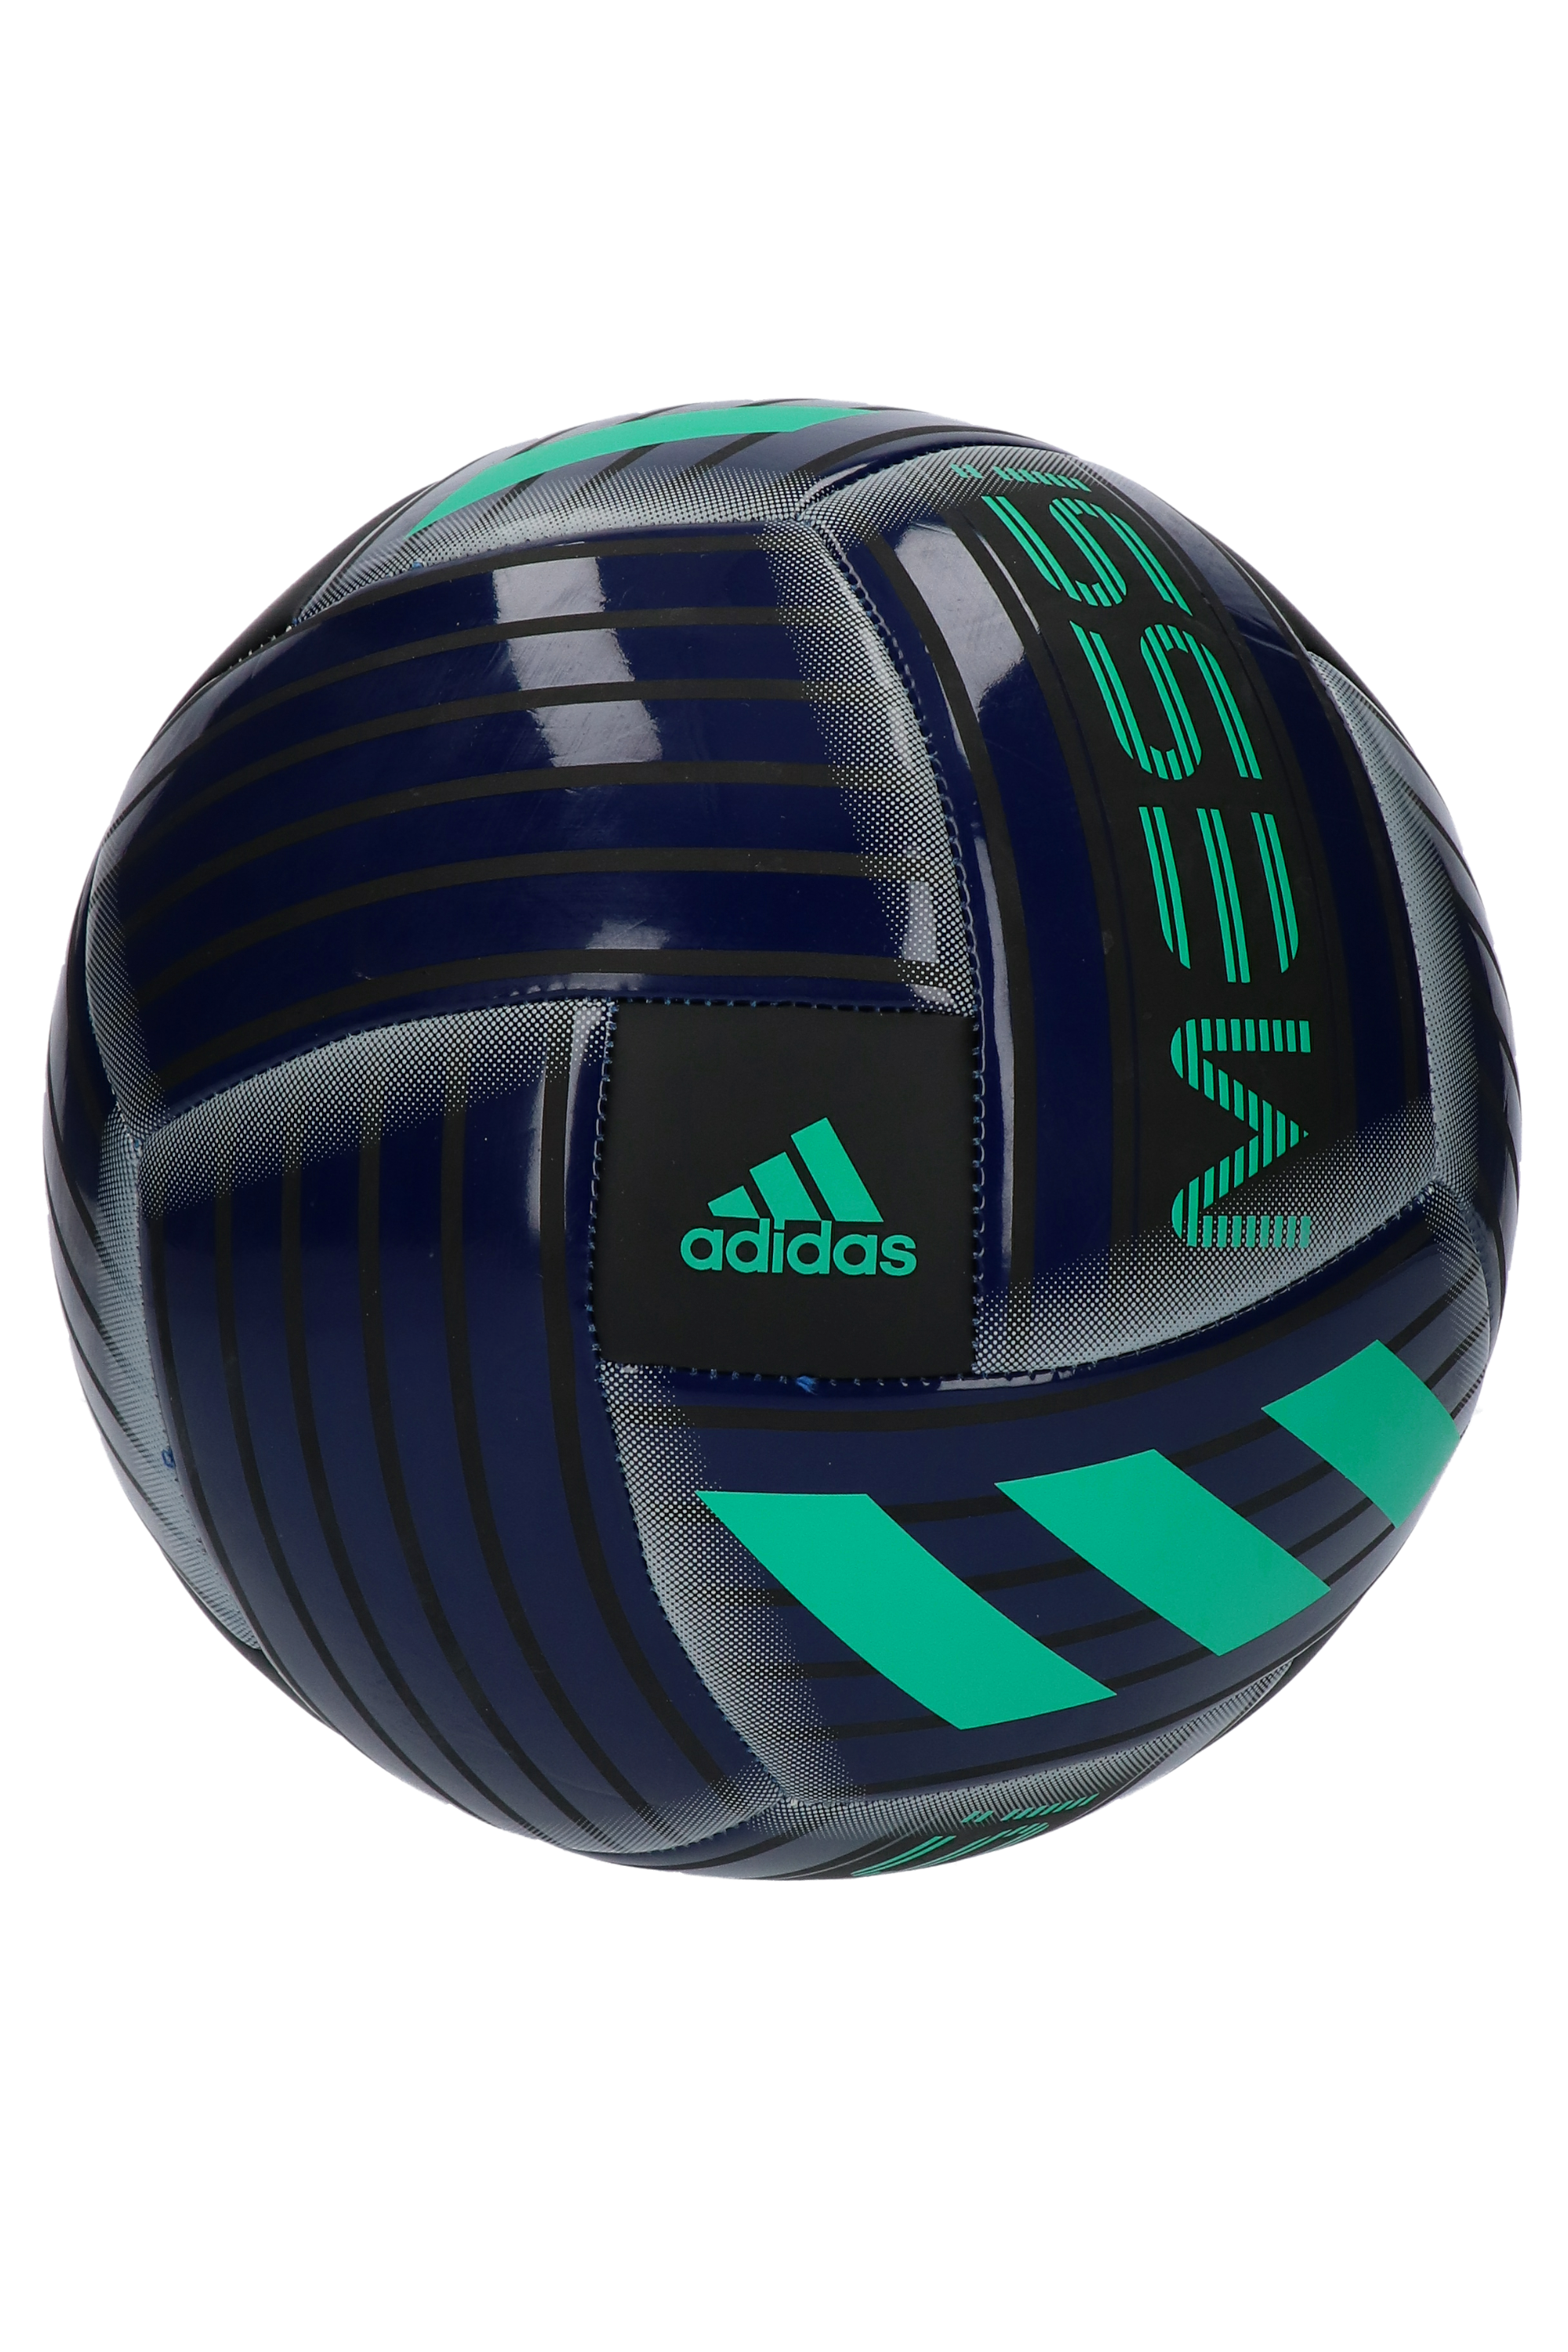 Ball adidas Messi Q2 size 5 | R-GOL.com - Football boots \u0026 equipment